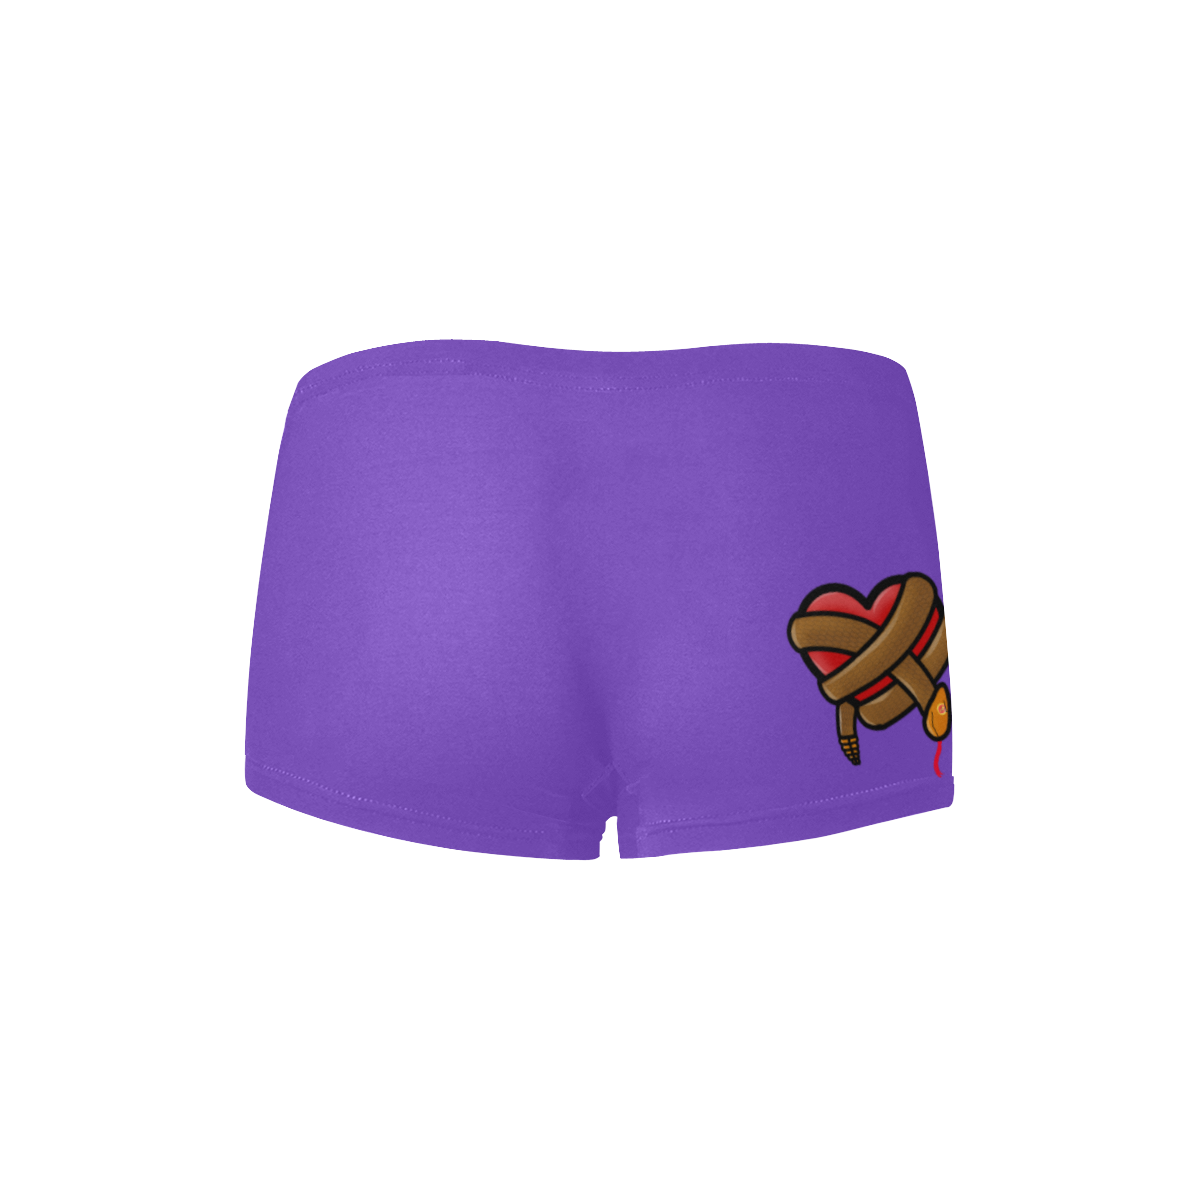 Women's Purple Fat Ma Bootyshorts Women's All Over Print Boyshort Panties (Model L31)